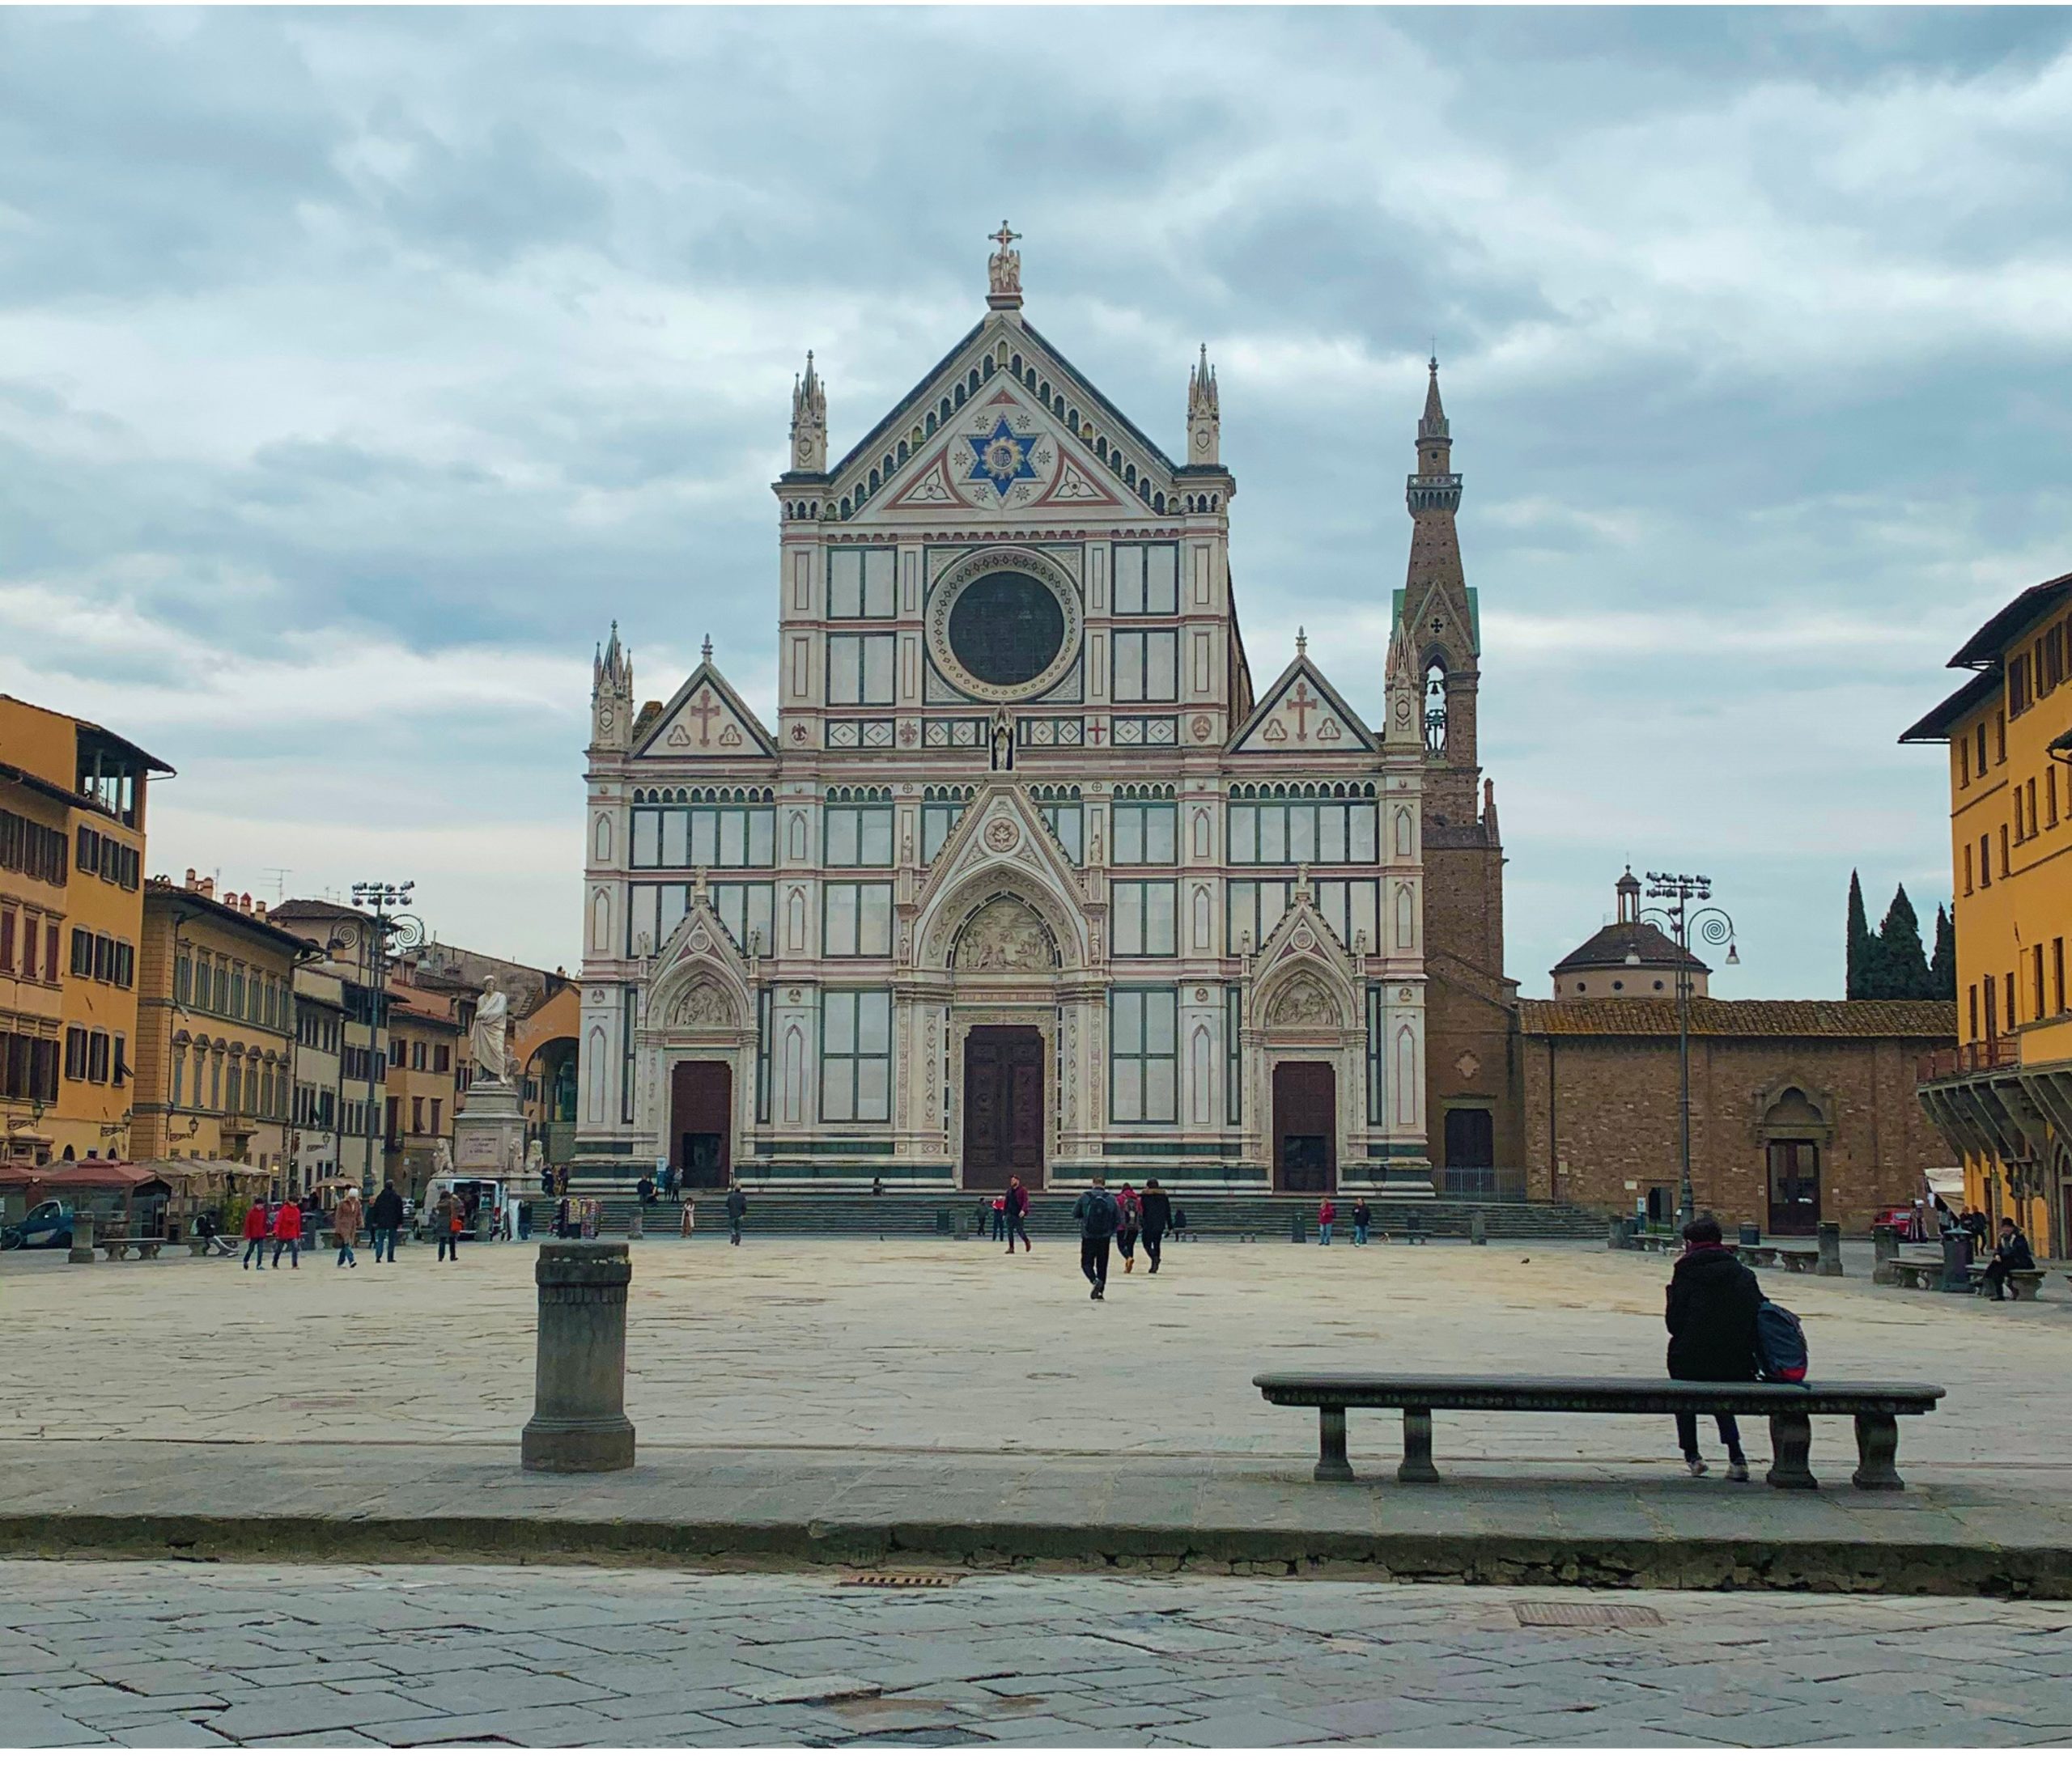 Santa Croce Basilica, home to Dante’s Monument!